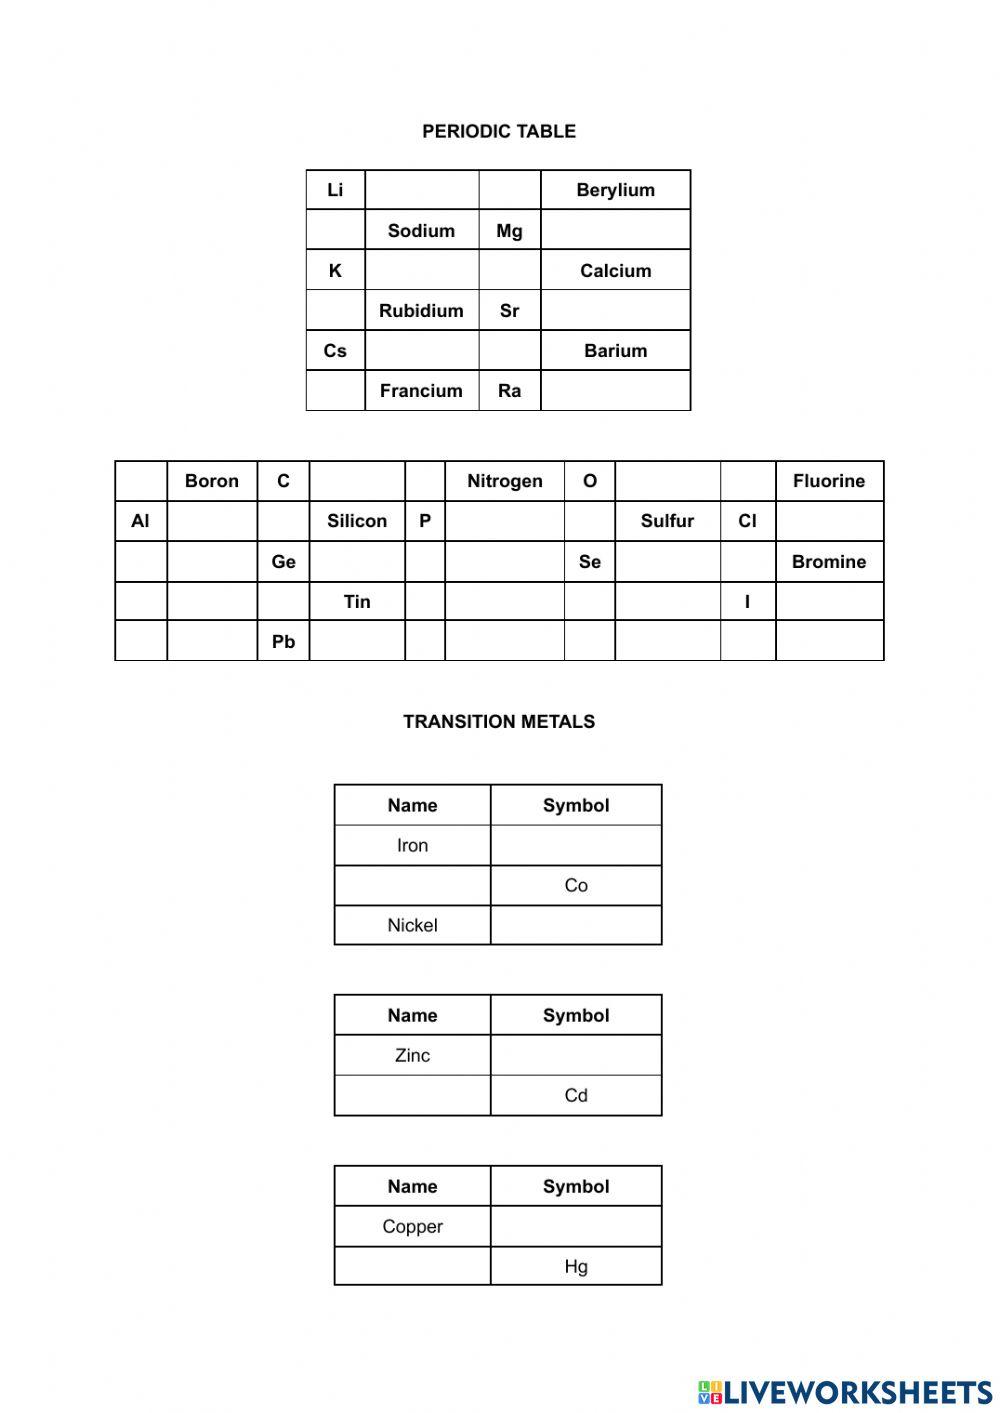 Periodic table (name - symbol)